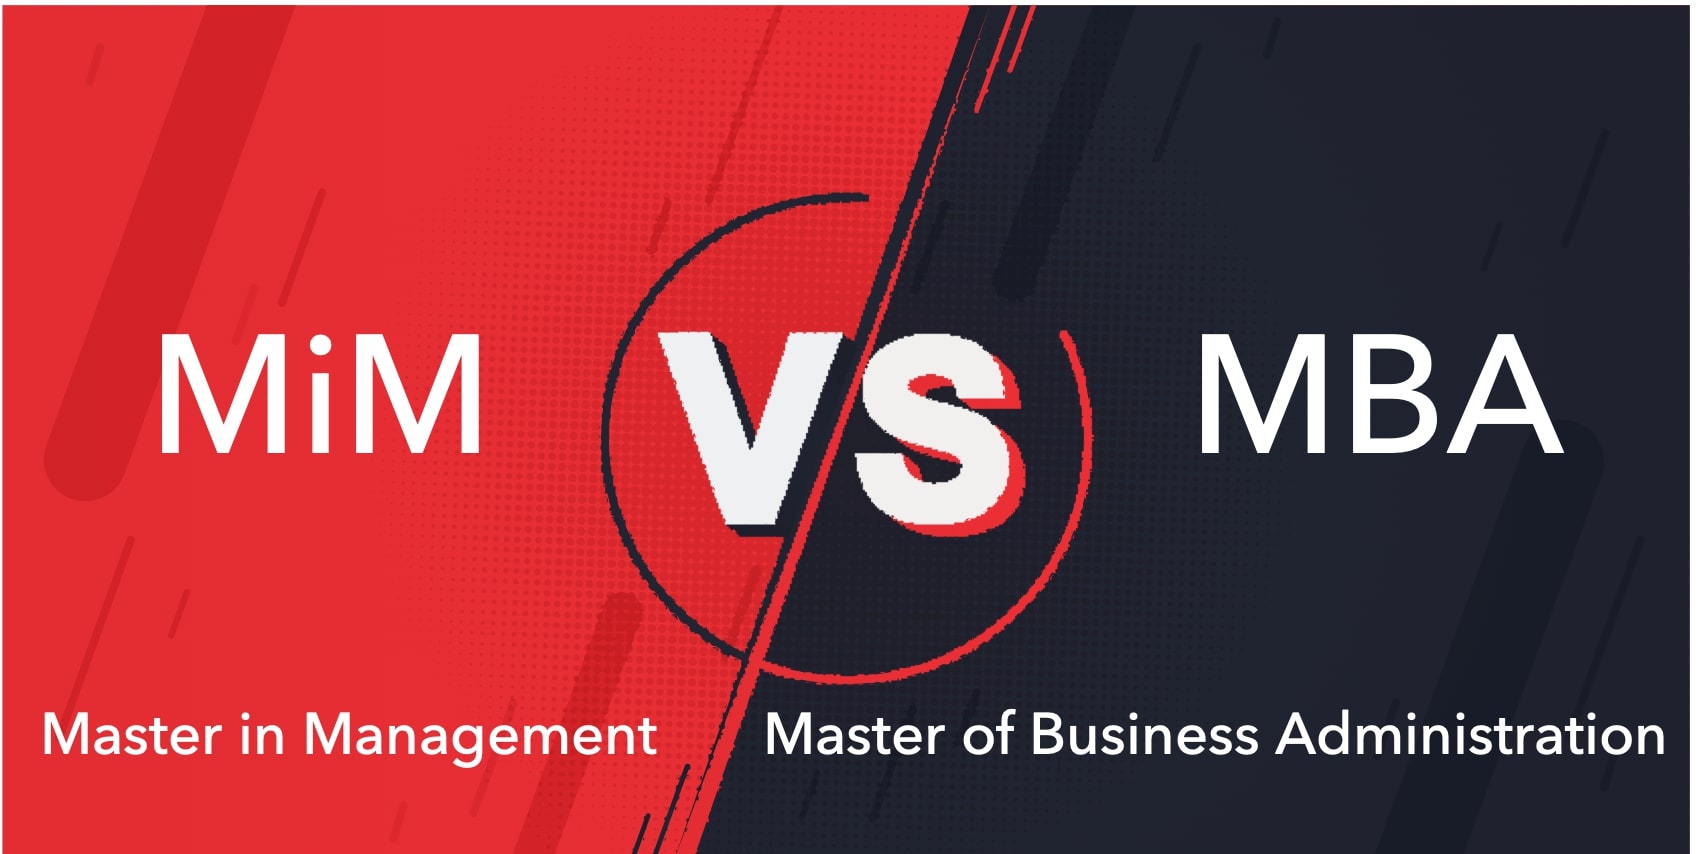 MIM vs MBA